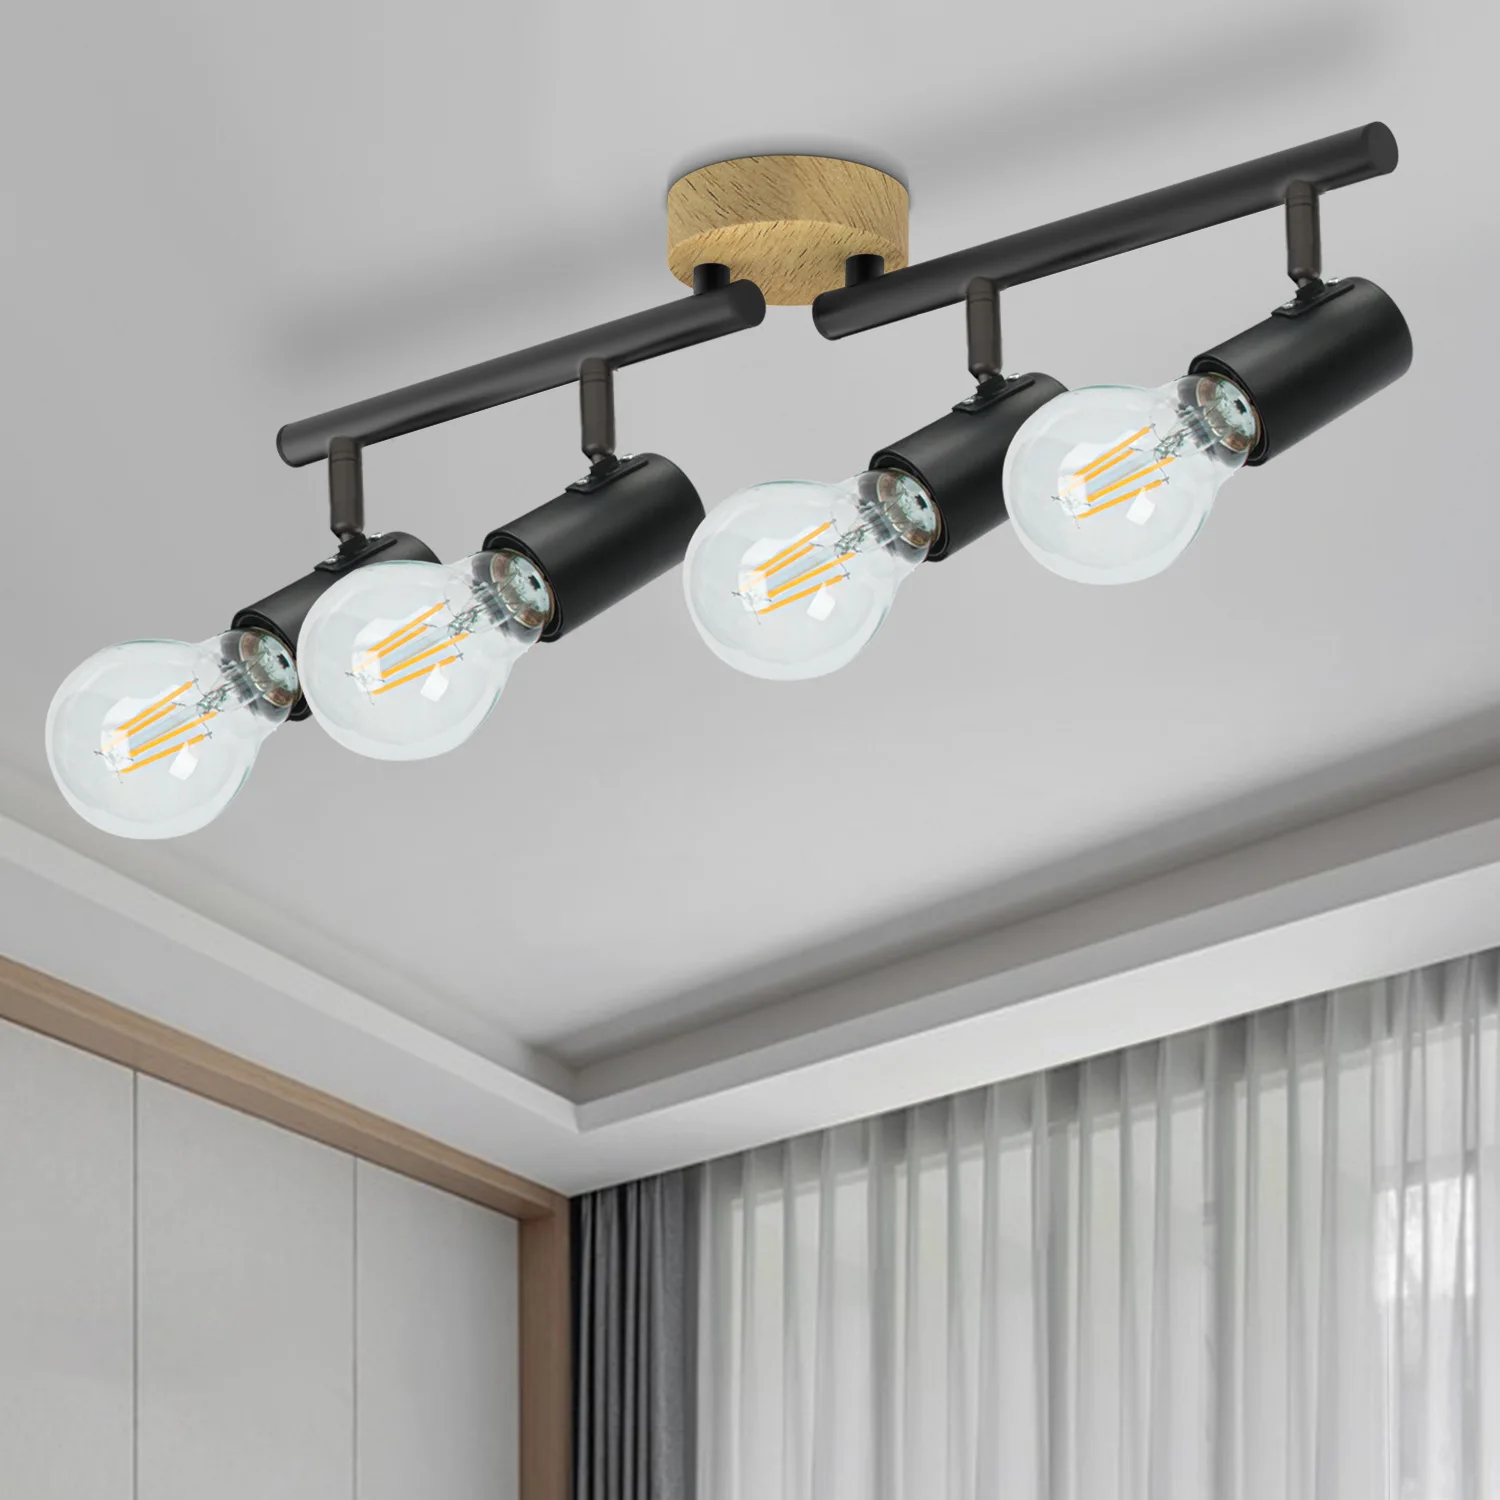 

Adjustable Angle Track Light Bedroom E27 Living Room Multi-Lamp Spotlight Spotlight Elm Retro Lamps Led Lighting Shop Lights